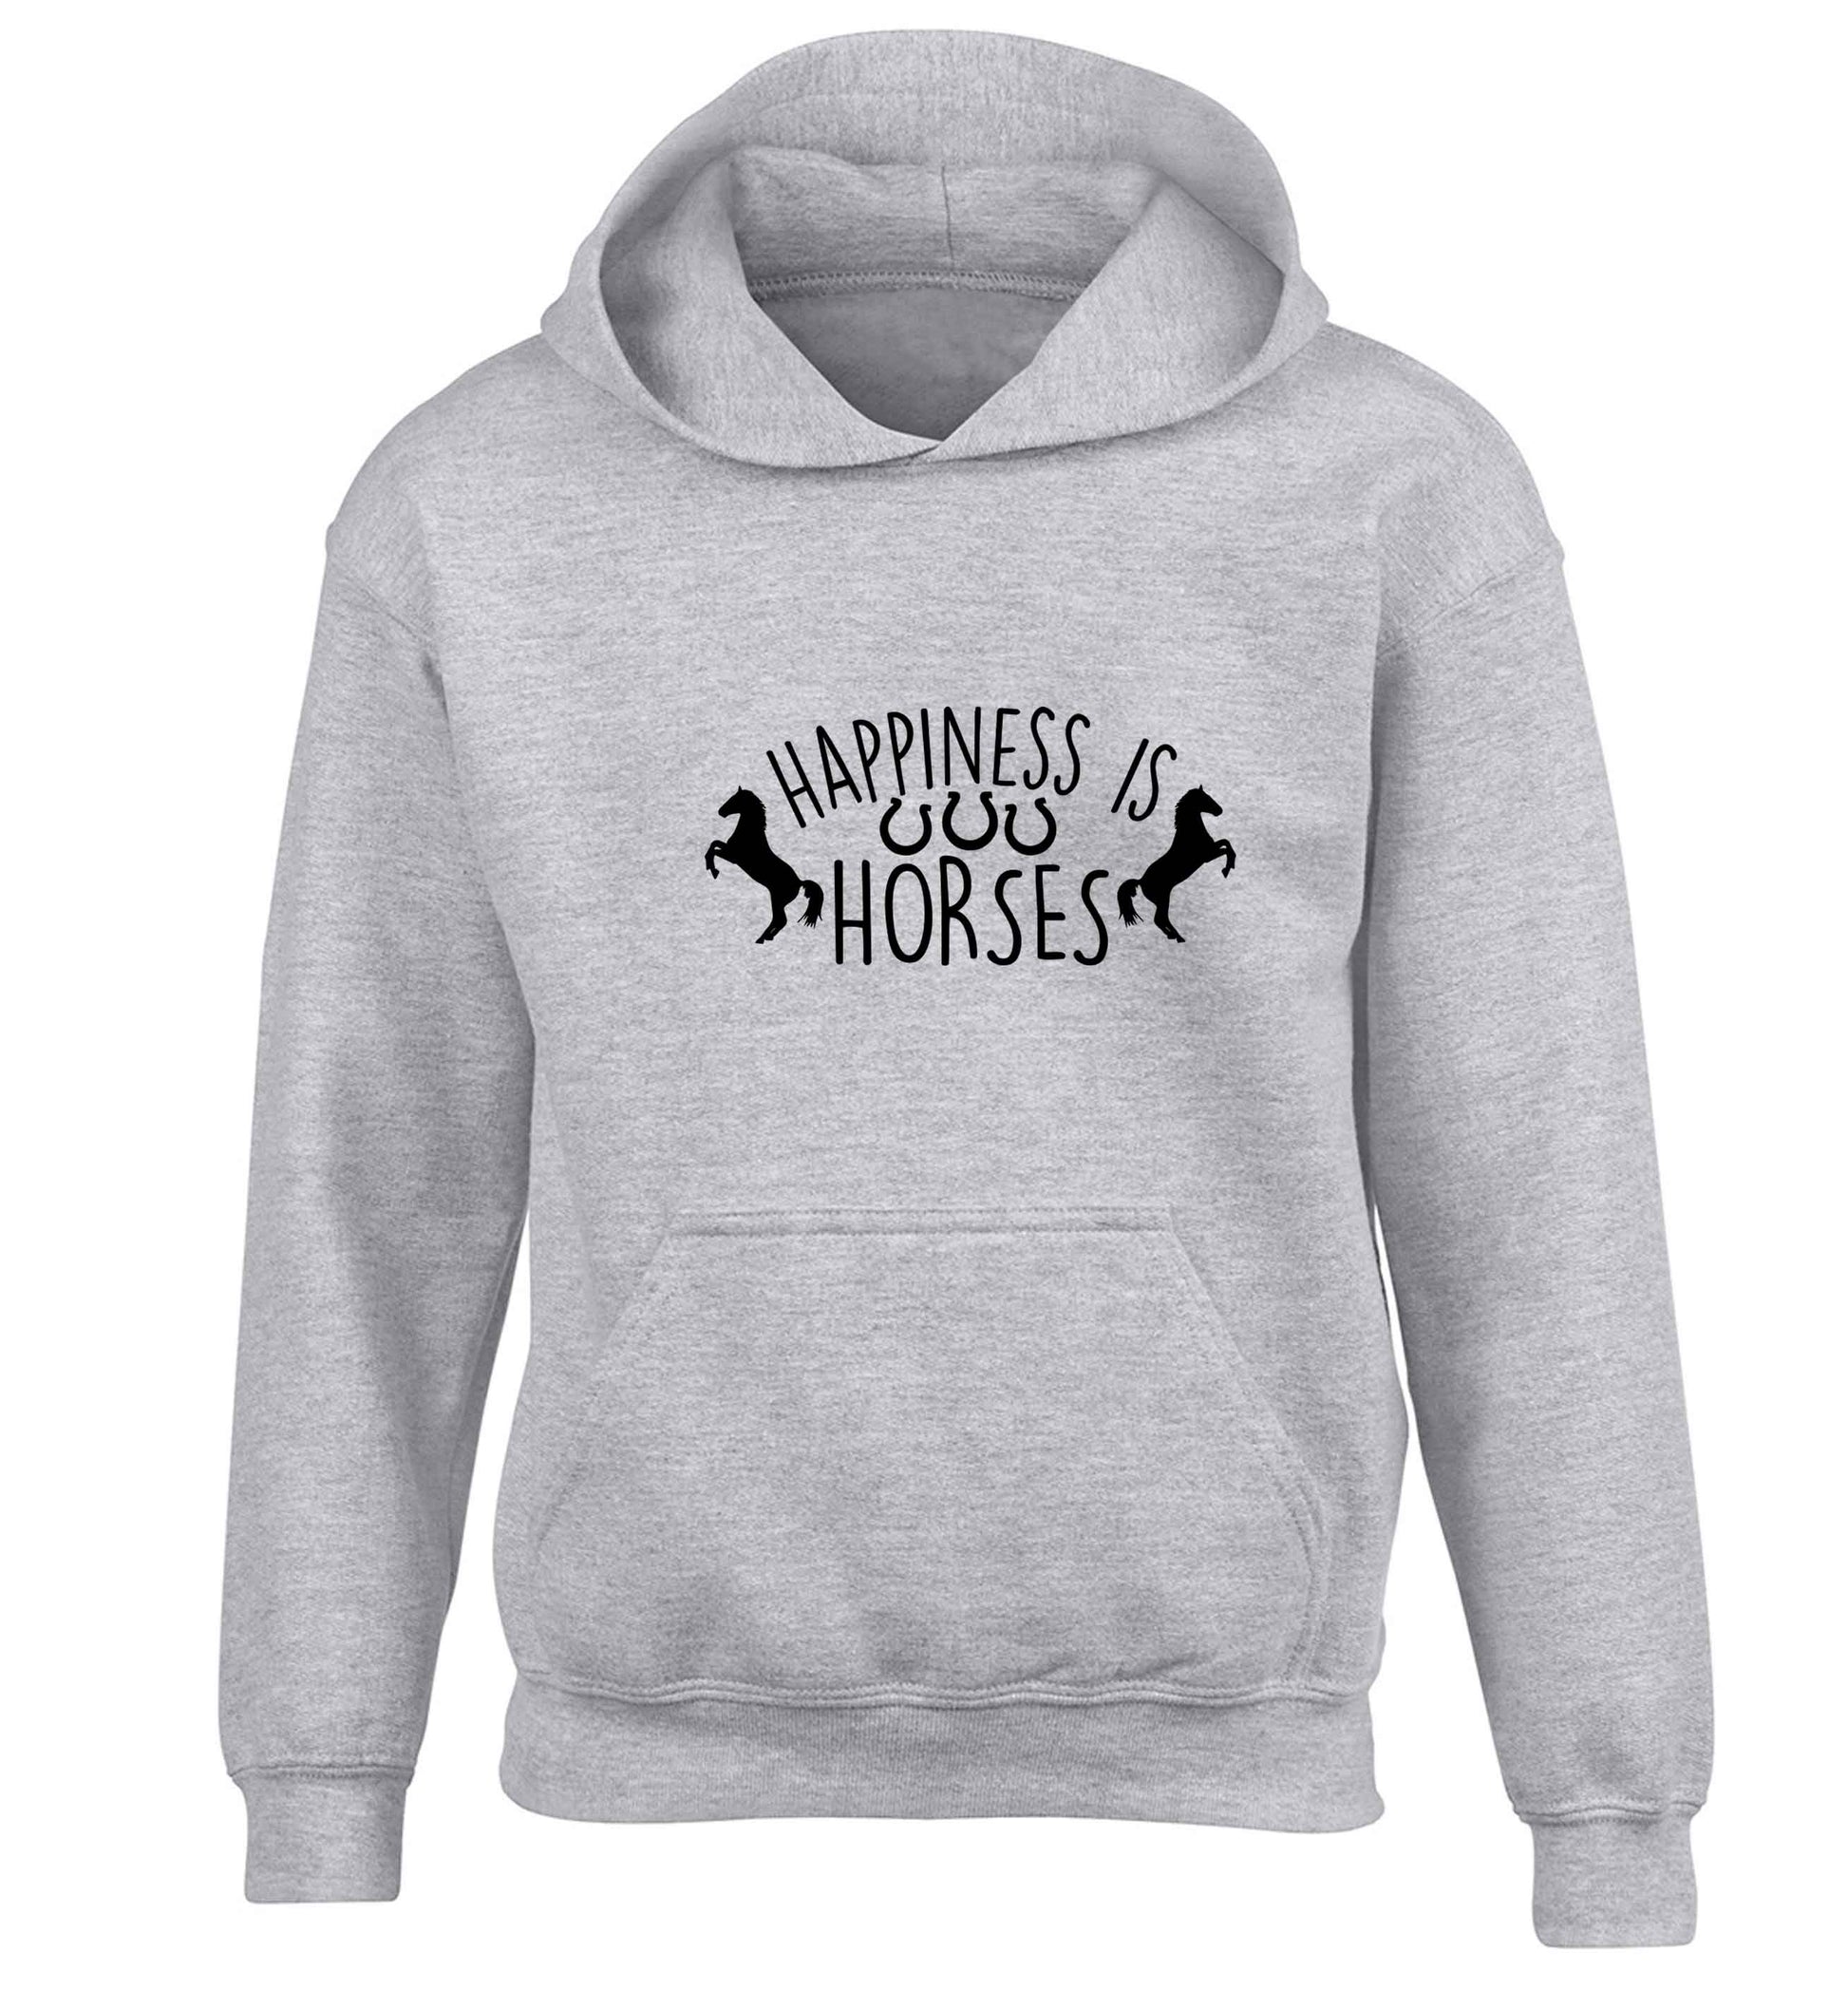 Happiness is horses children's grey hoodie 12-13 Years